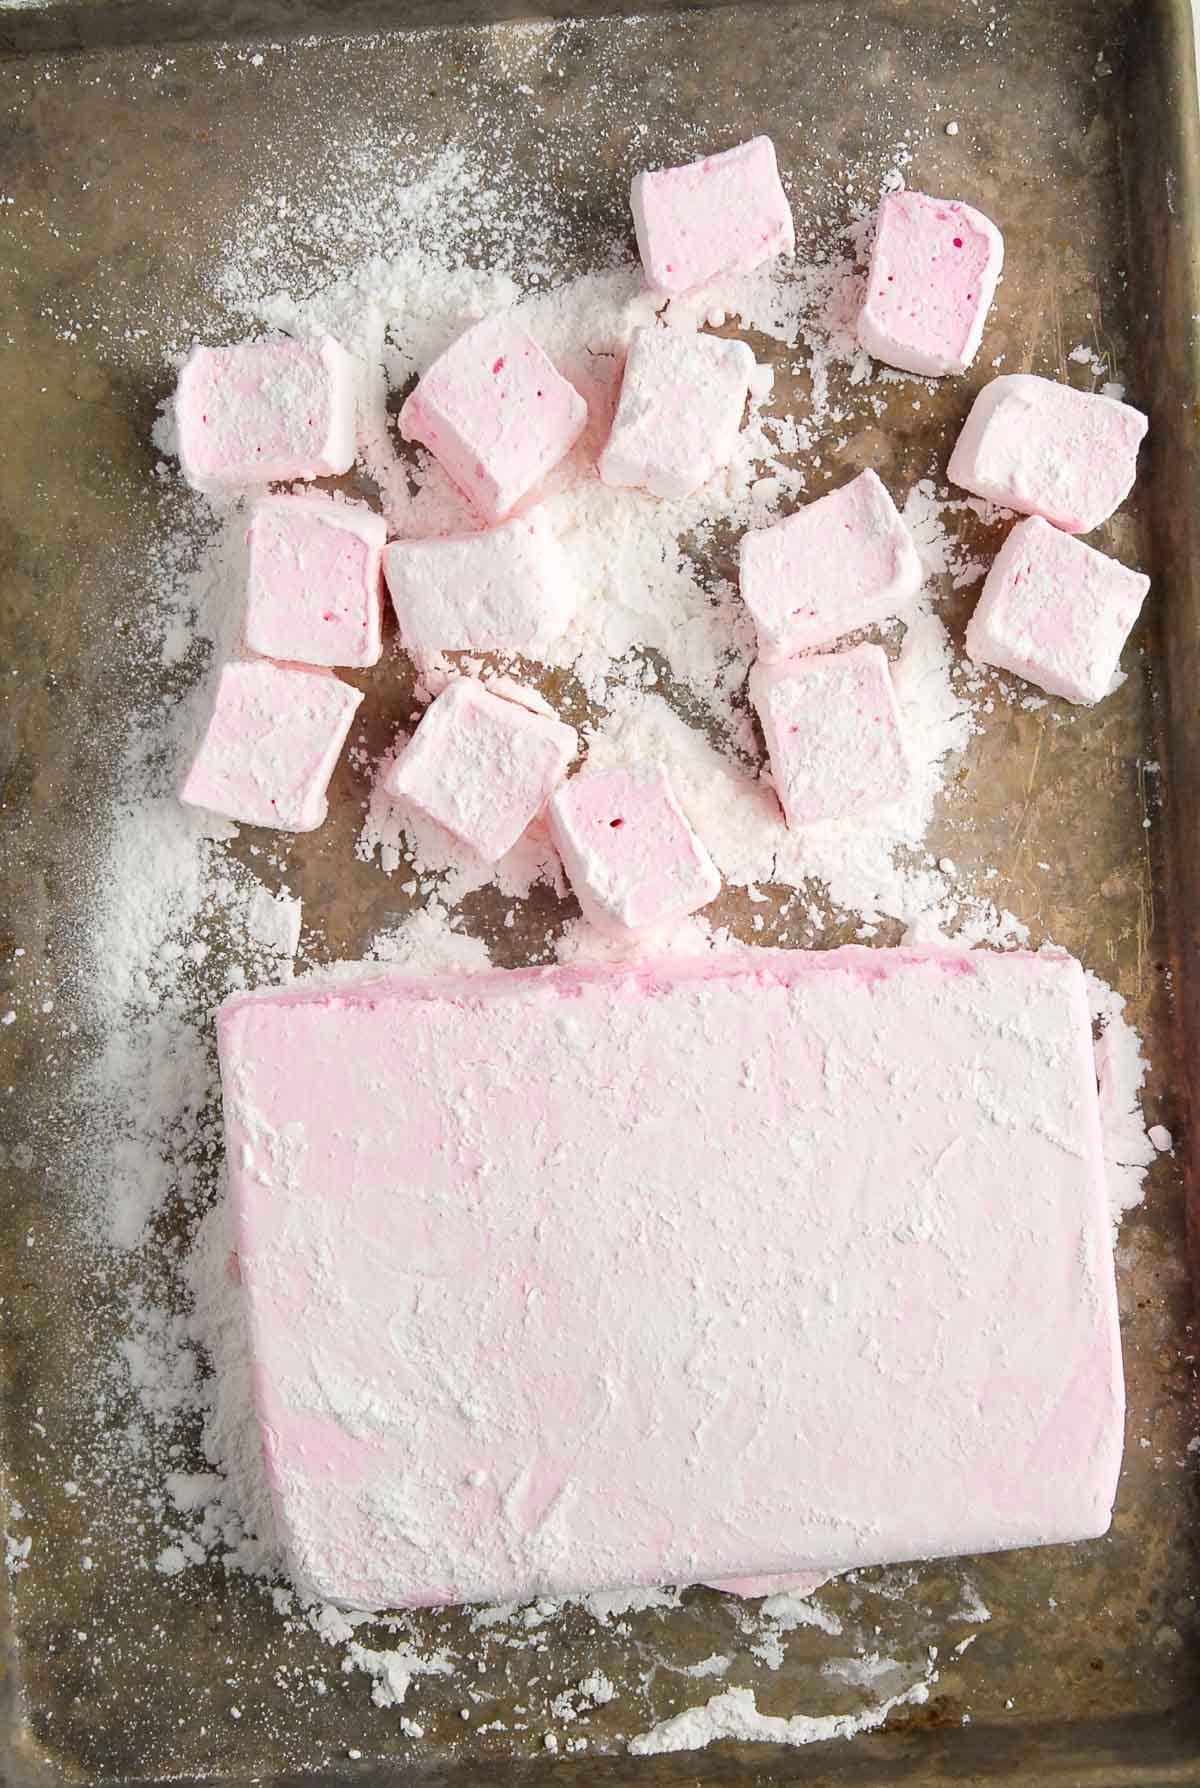 rose flavored homemade marshmallows on baking sheet.